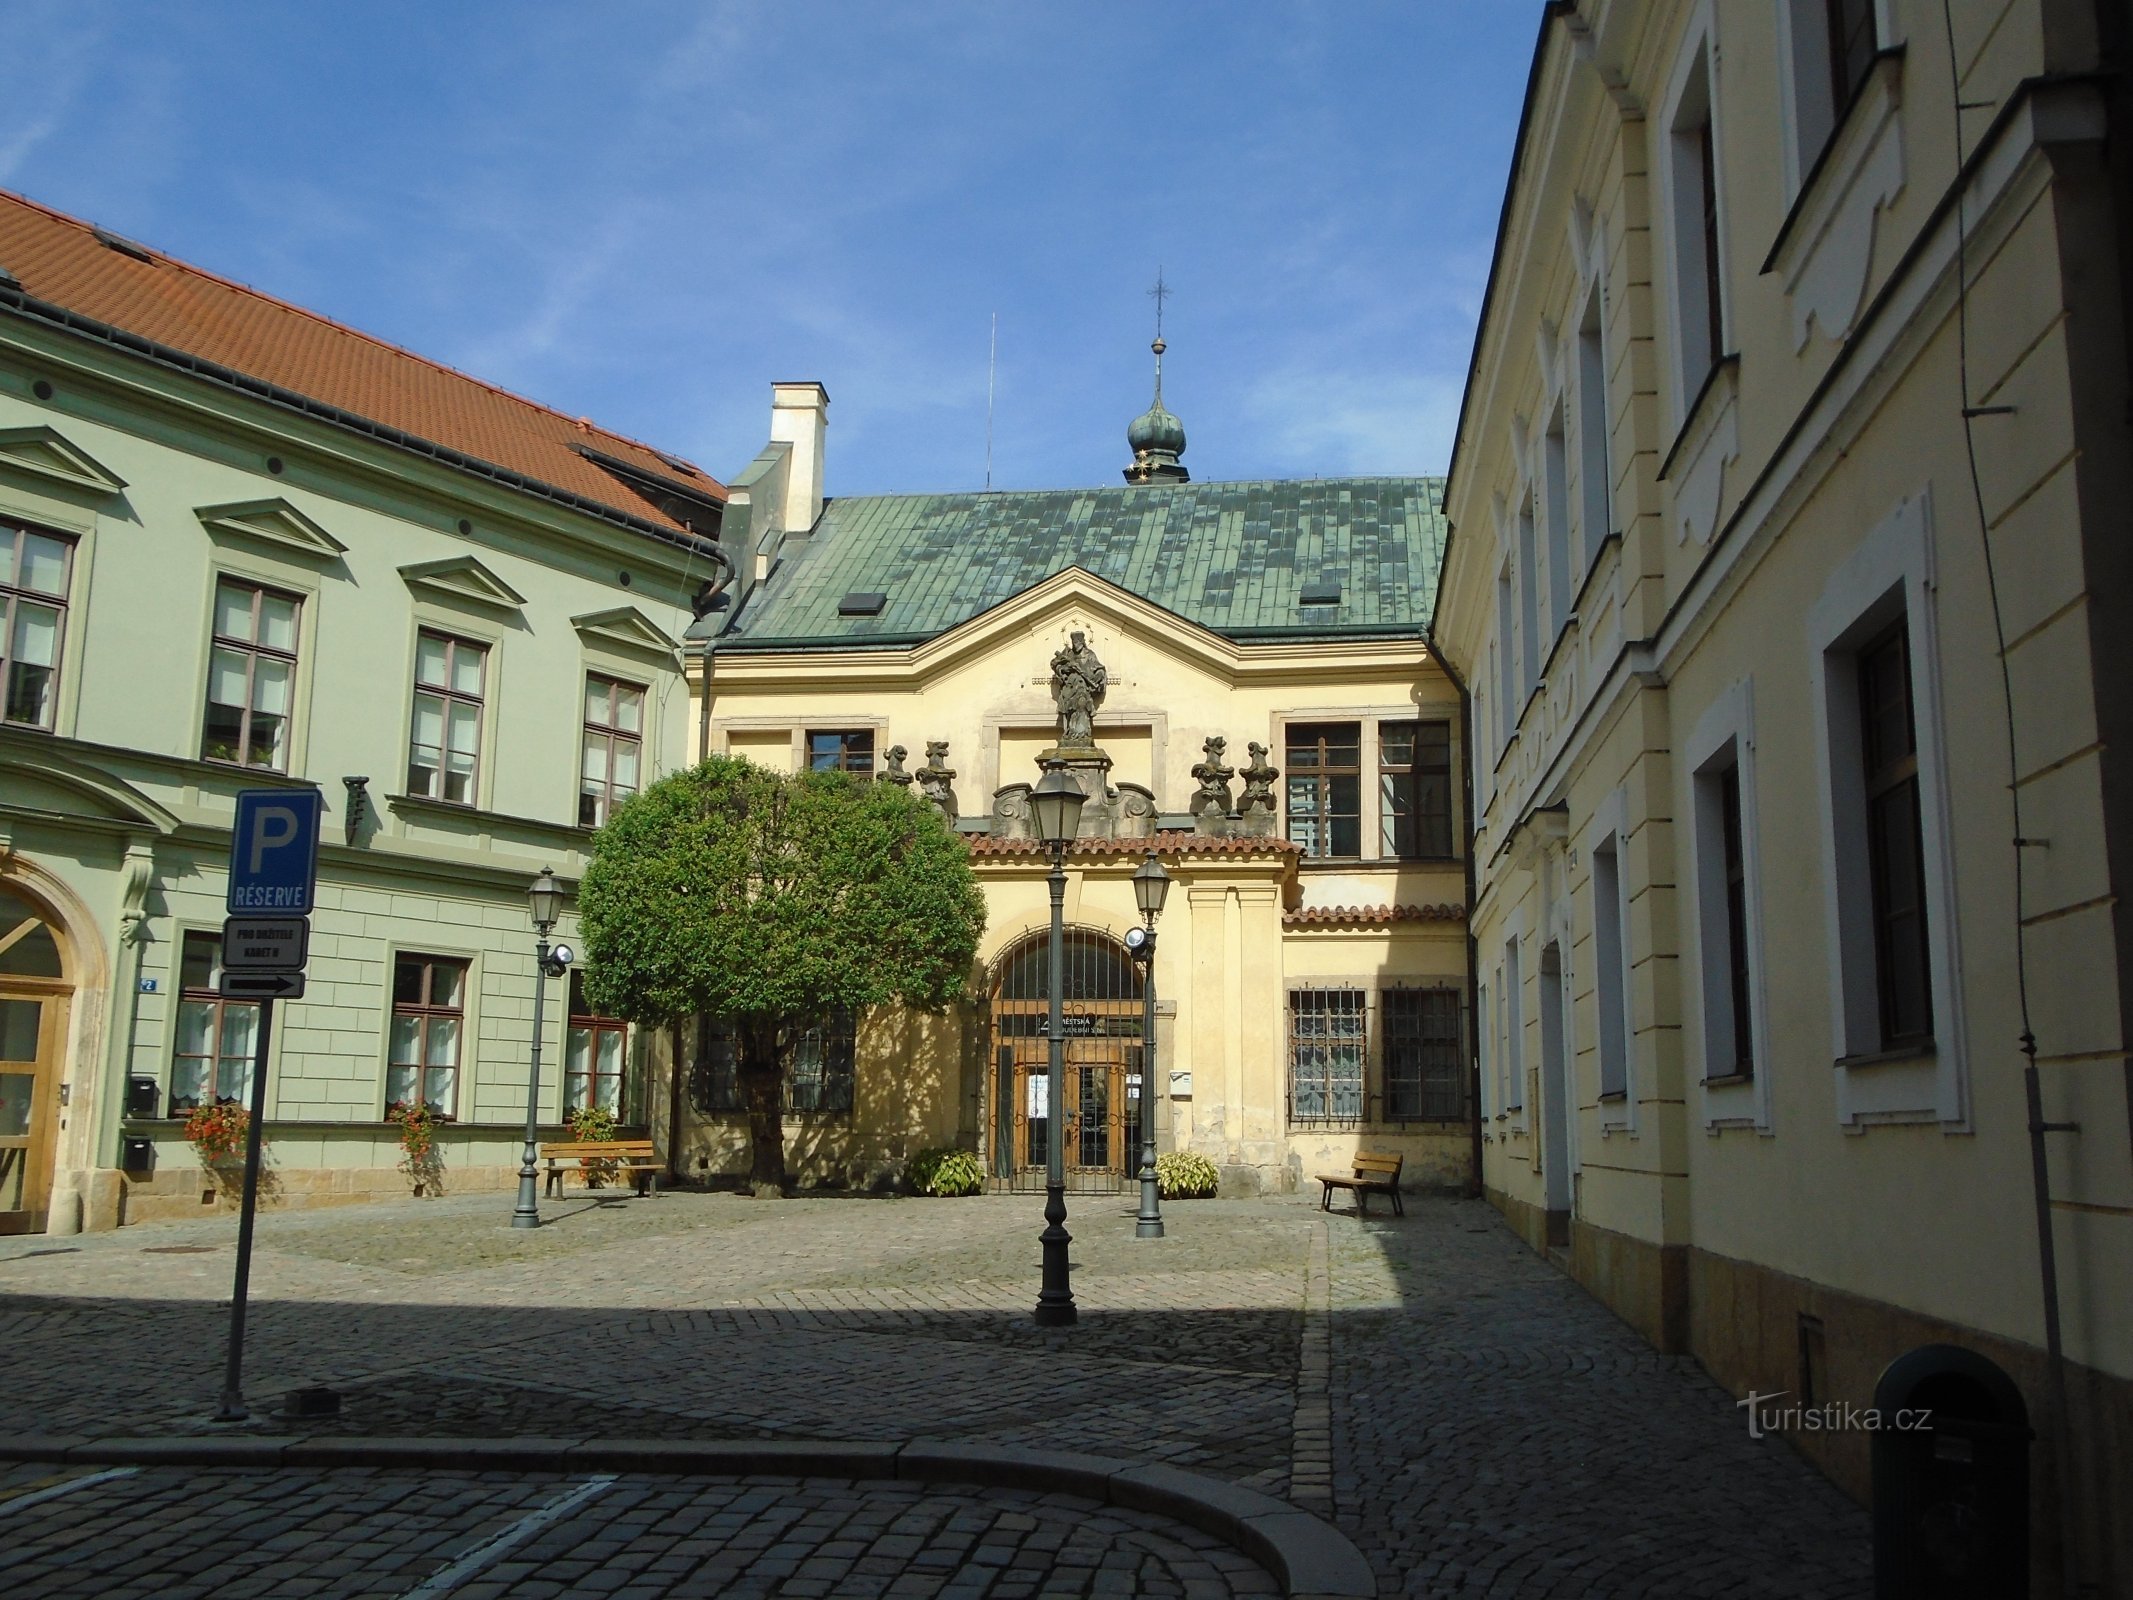 På slottet nr. 91 (Hradec Králové, 16.9.2018. oktober XNUMX)